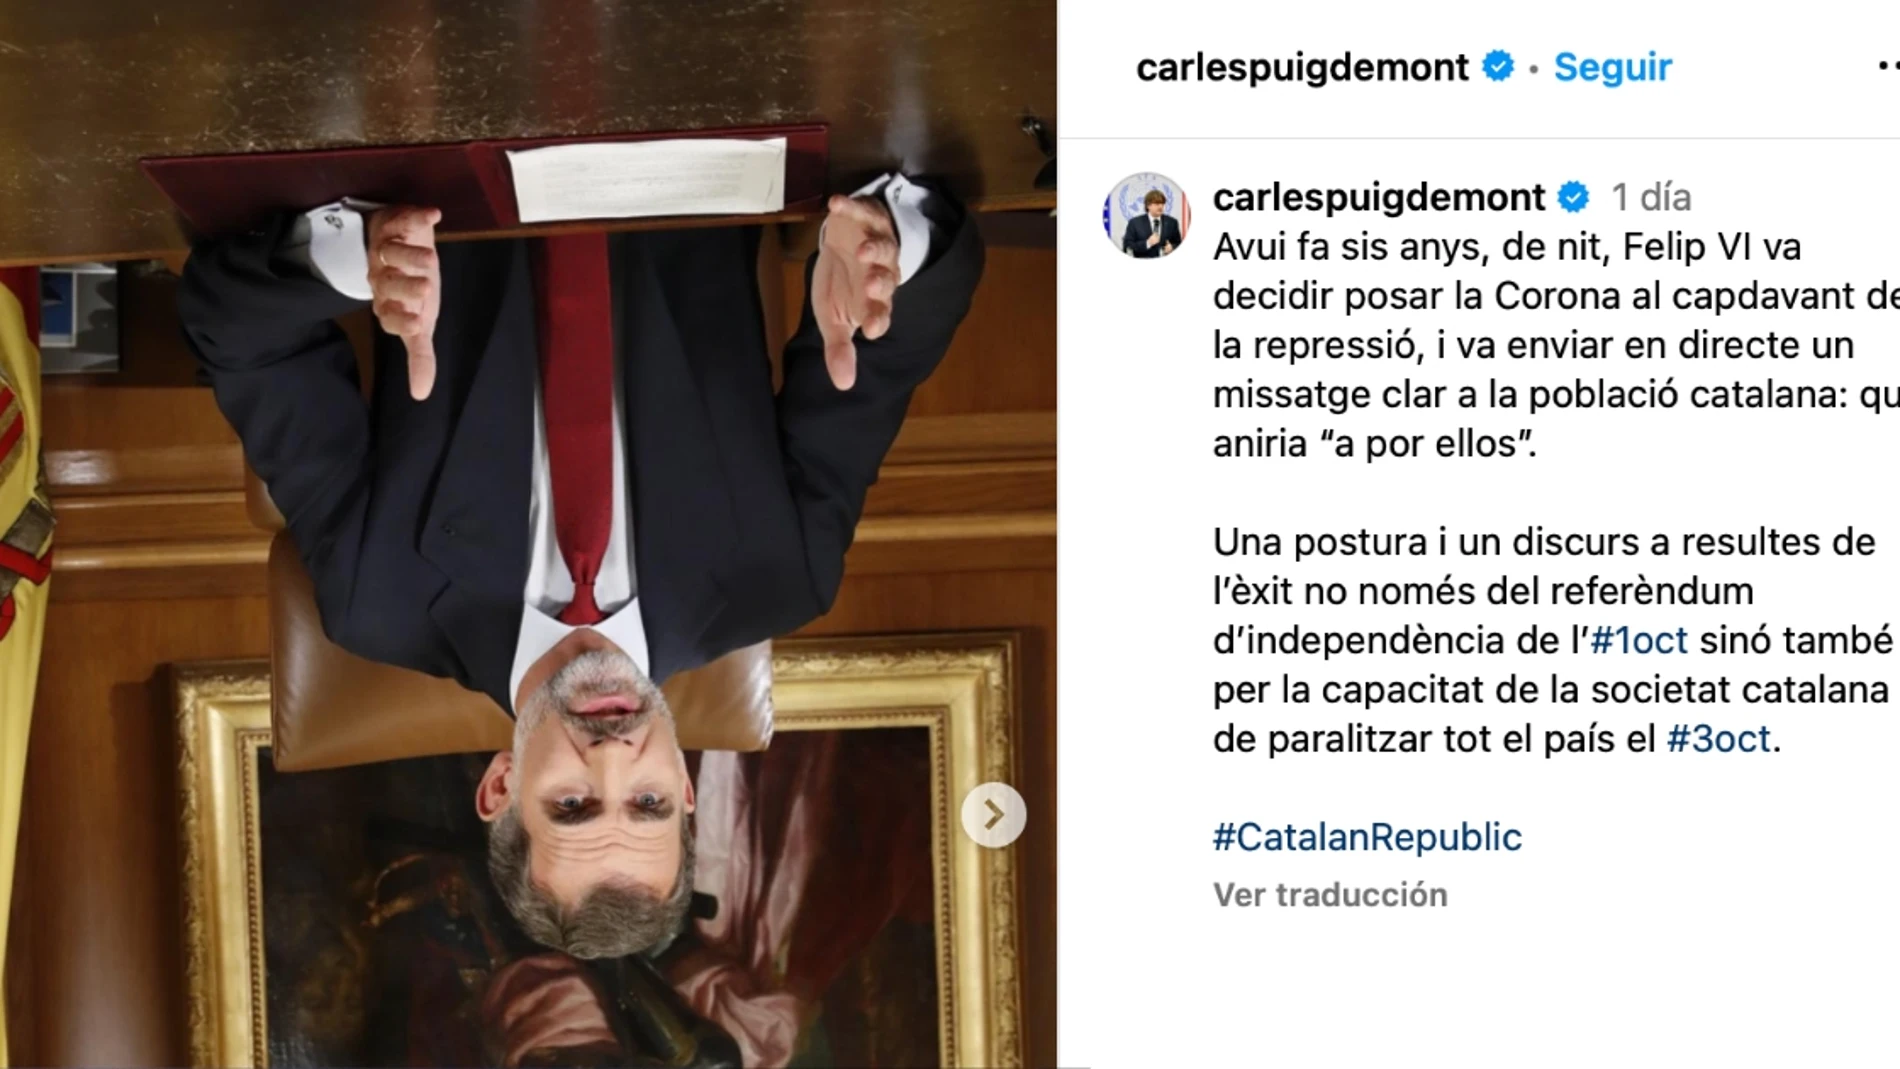 Felipe VI en el Instagram de Carles Puigdemont